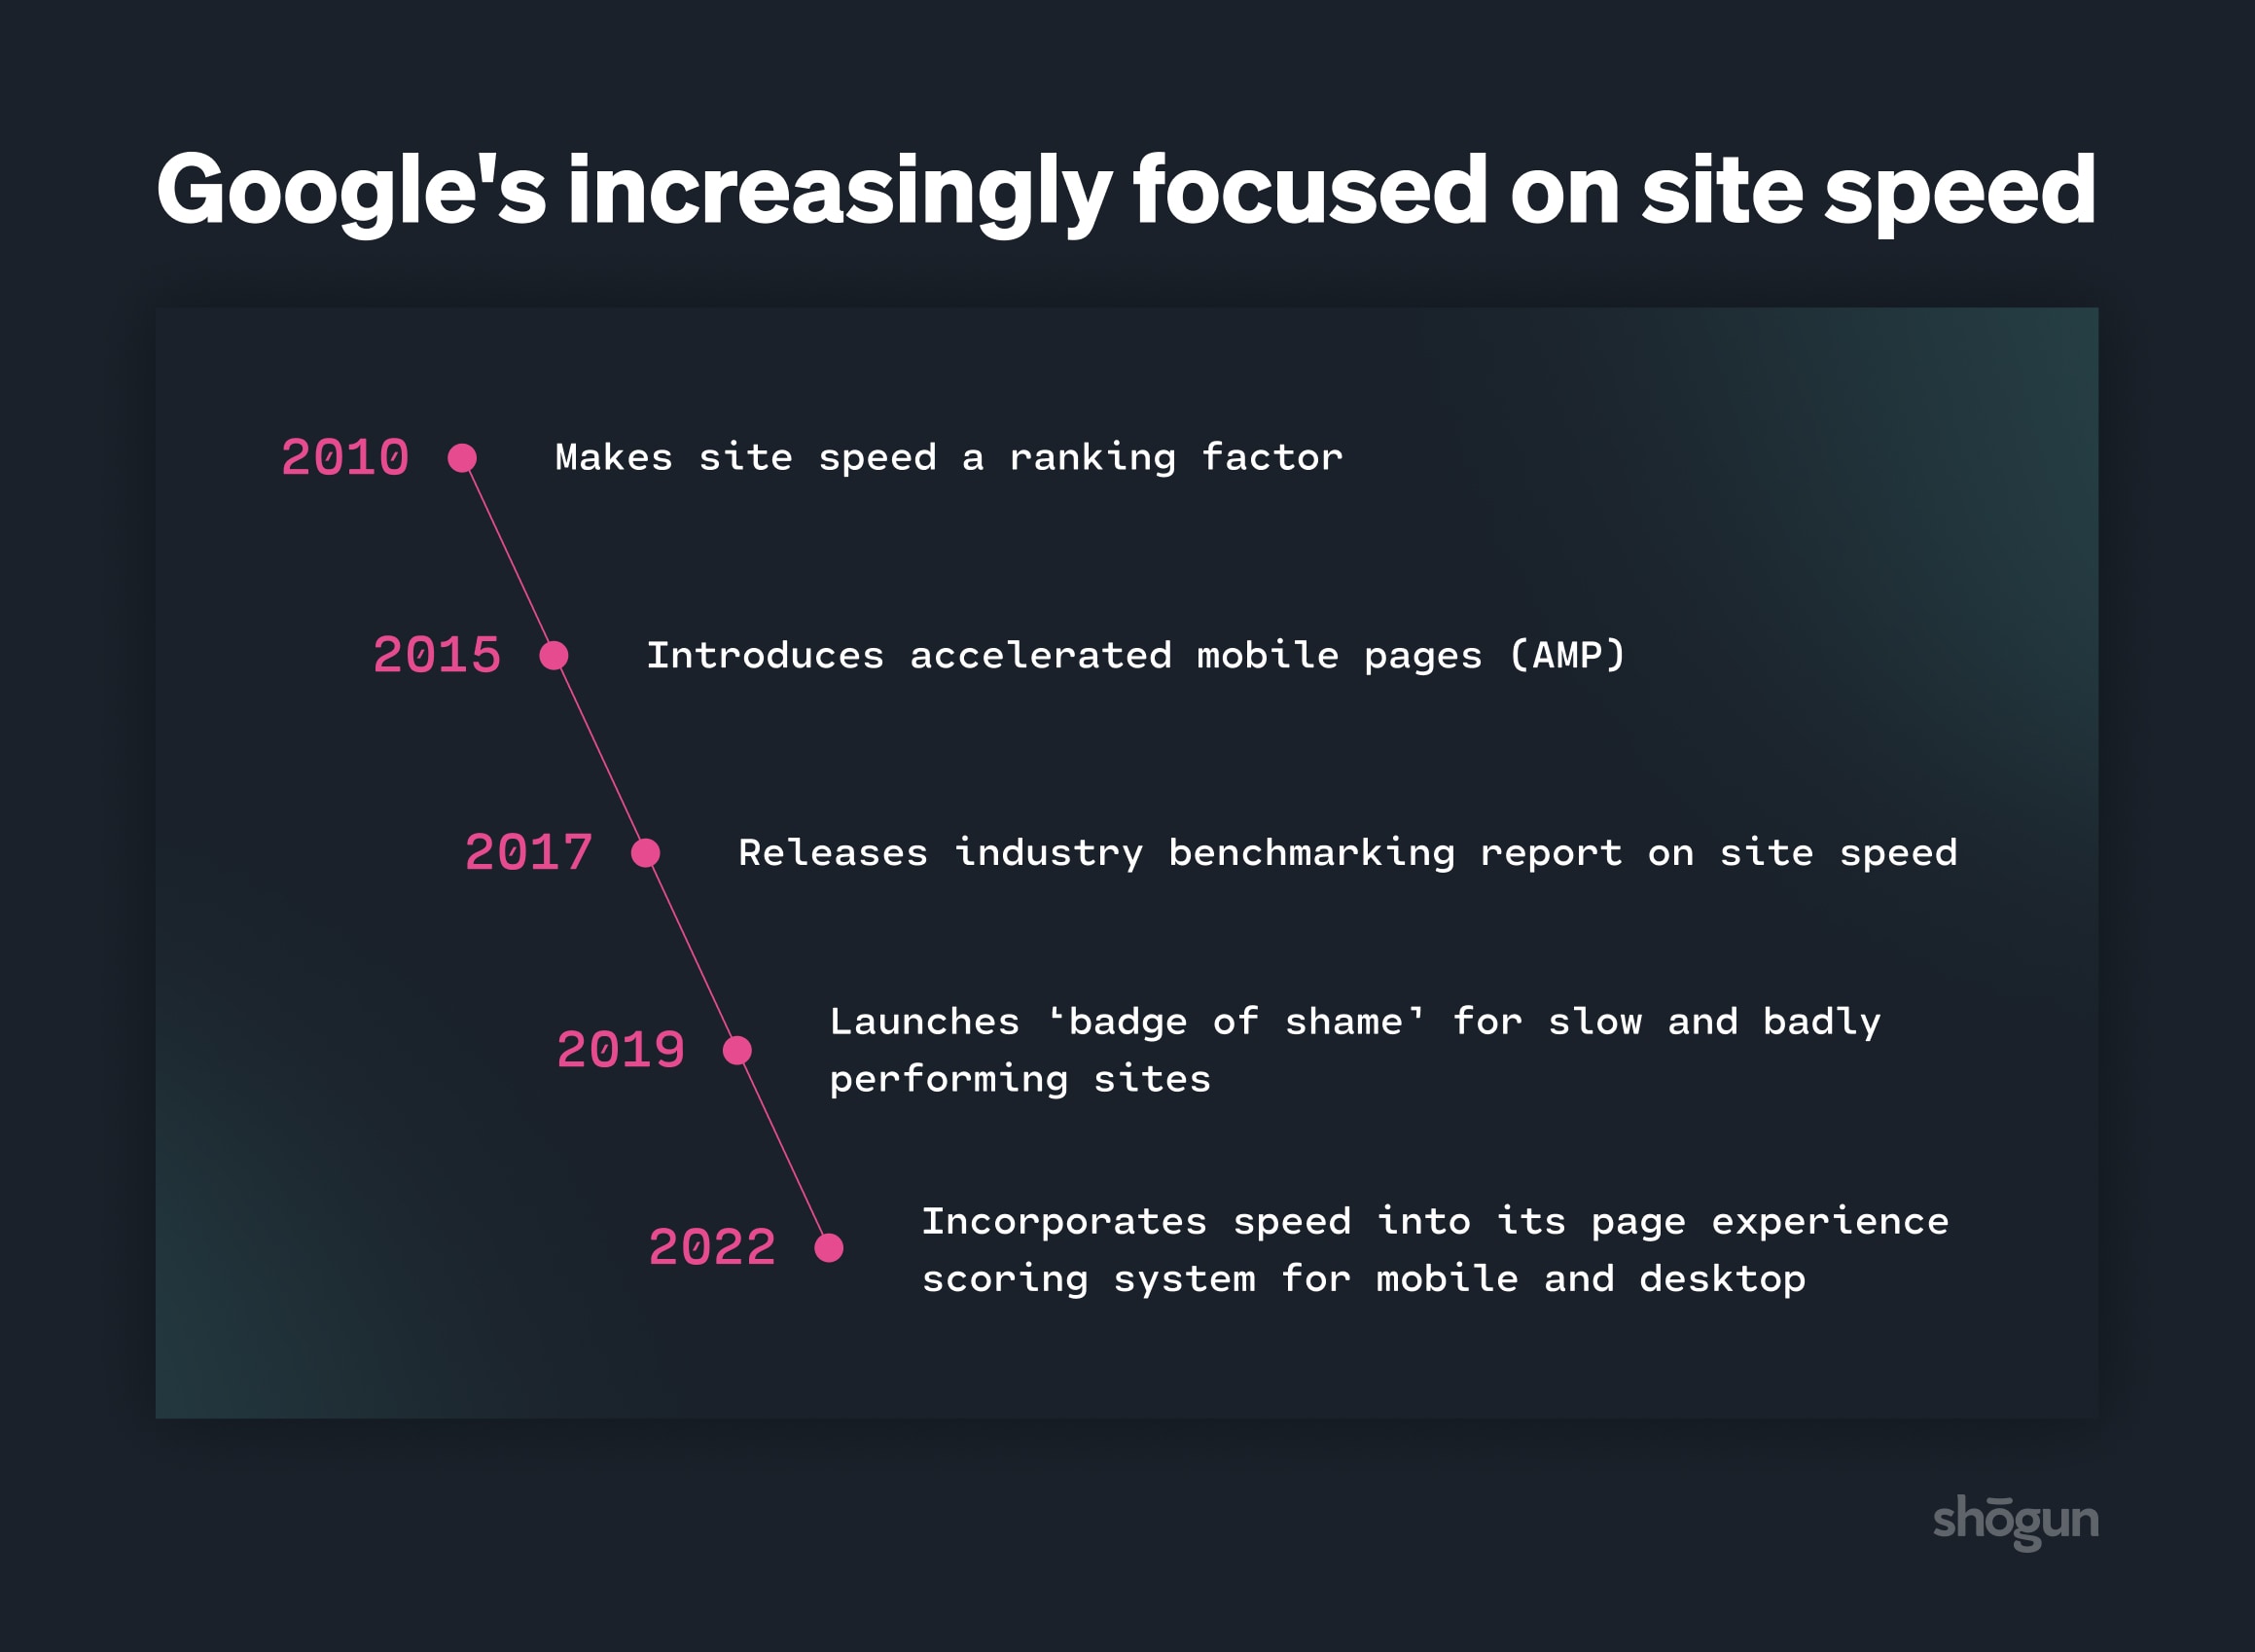 Google's focus on site speed